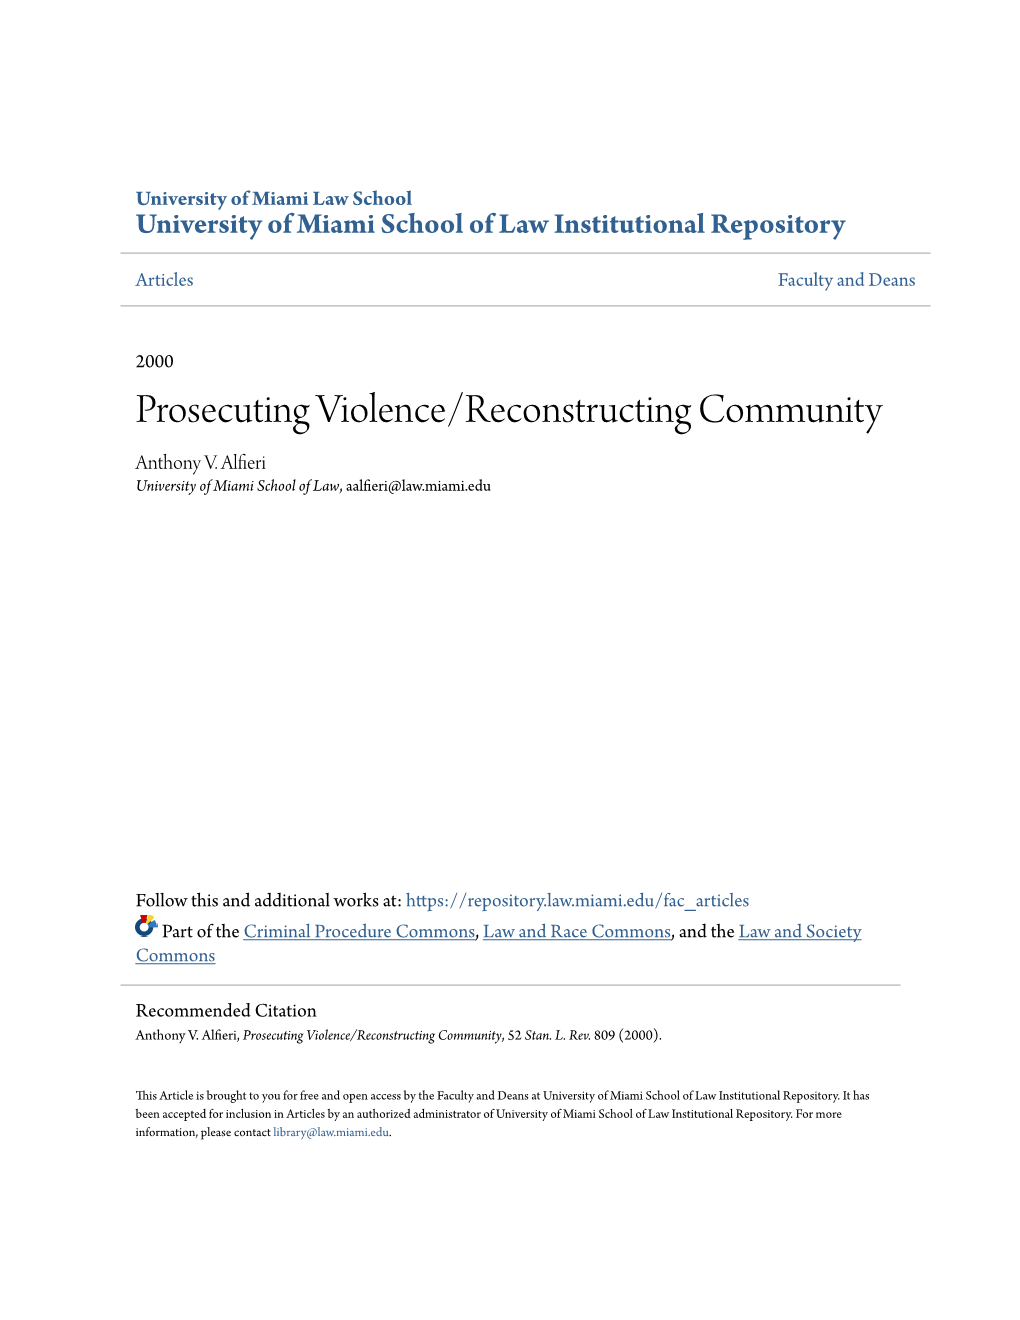 Prosecuting Violence/Reconstructing Community Anthony V